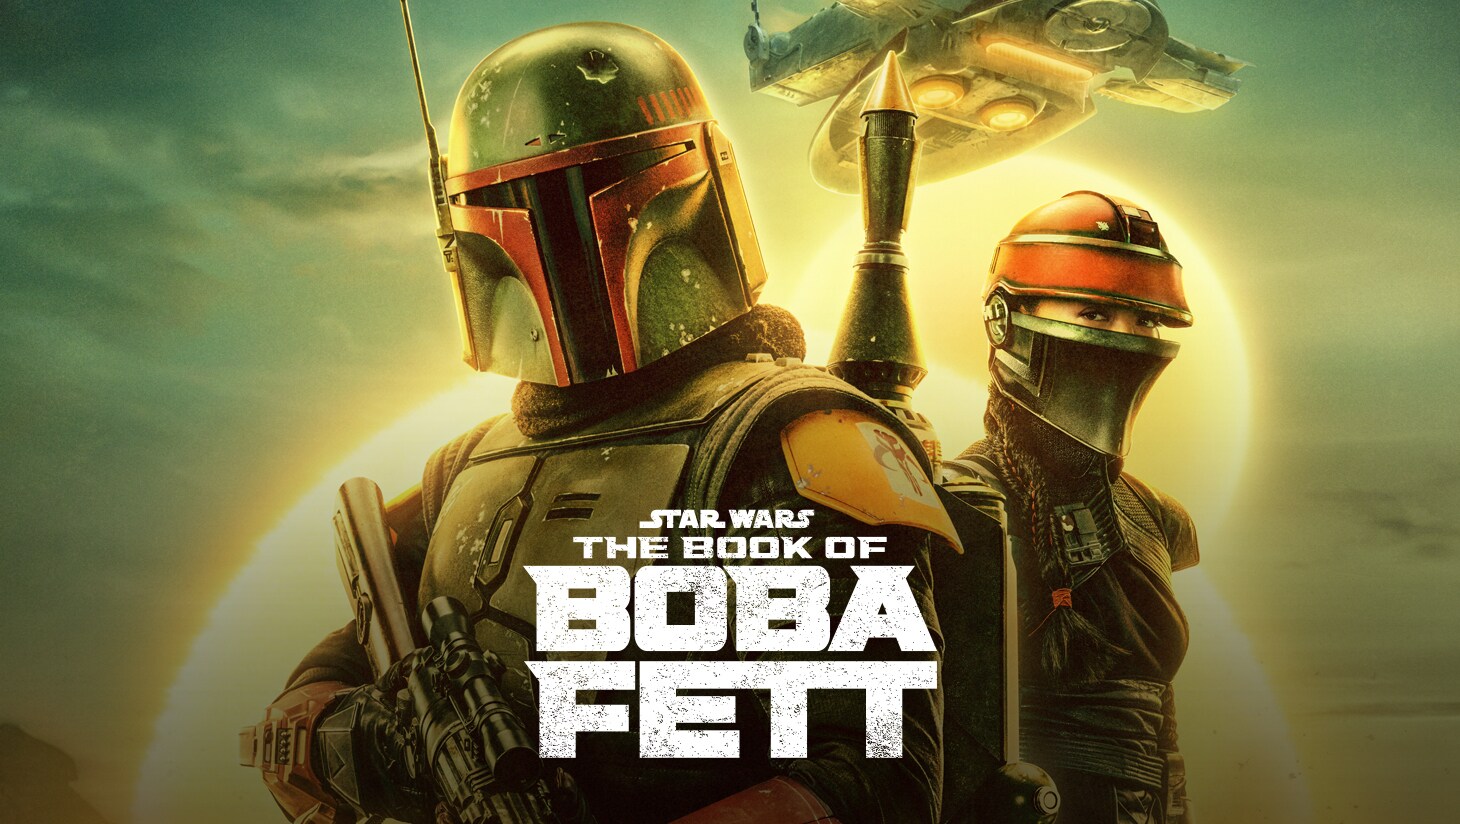 Star Wars The Book of Boba Fett keyart featuring Boba Fett and Fennec Shand.